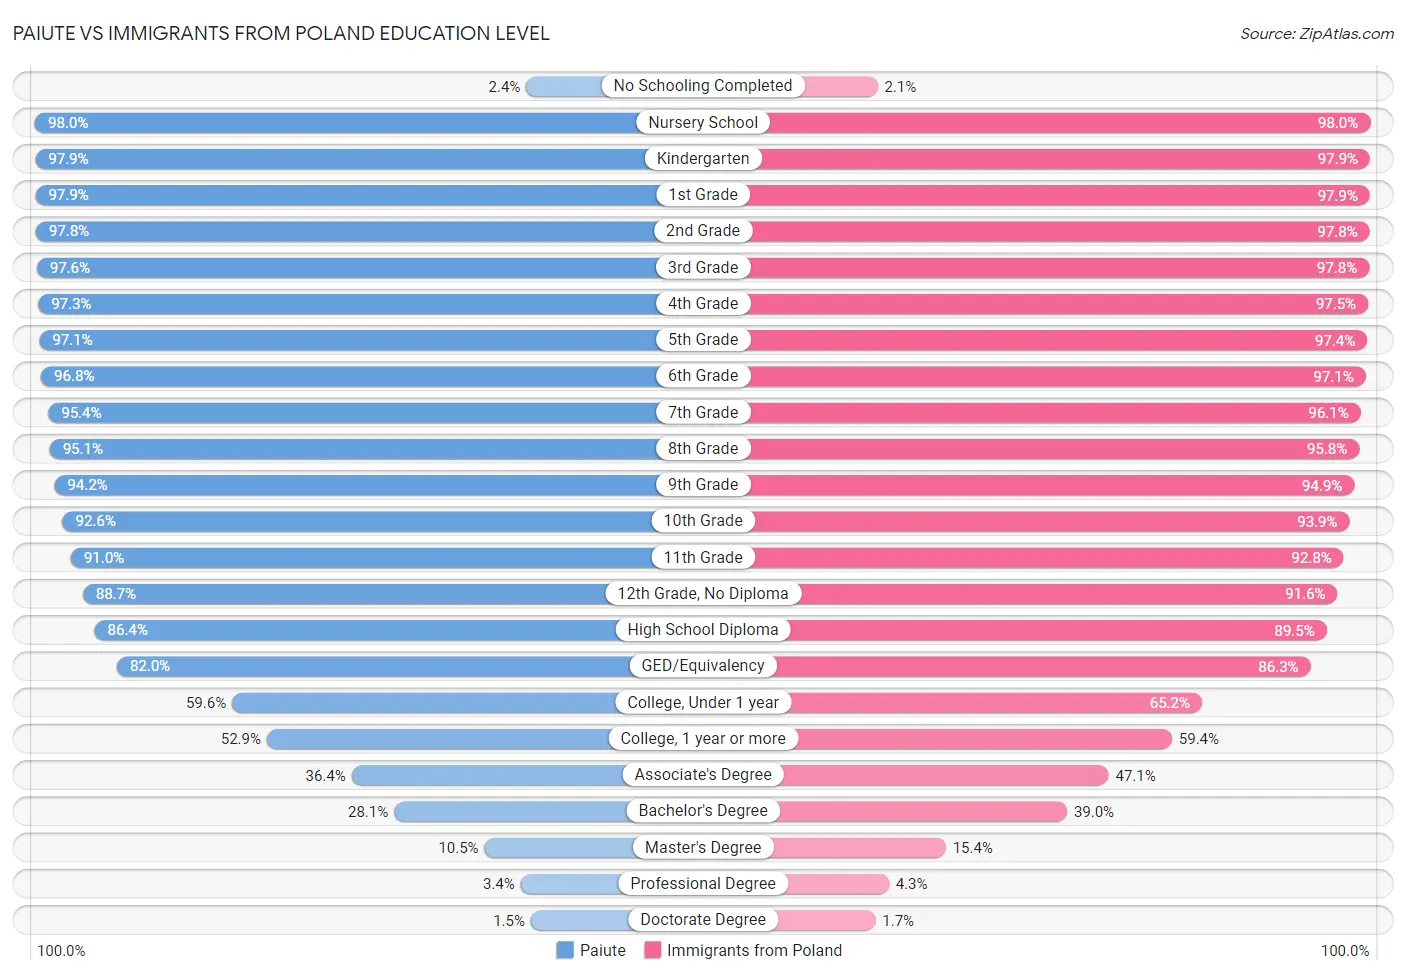 Paiute vs Immigrants from Poland Education Level